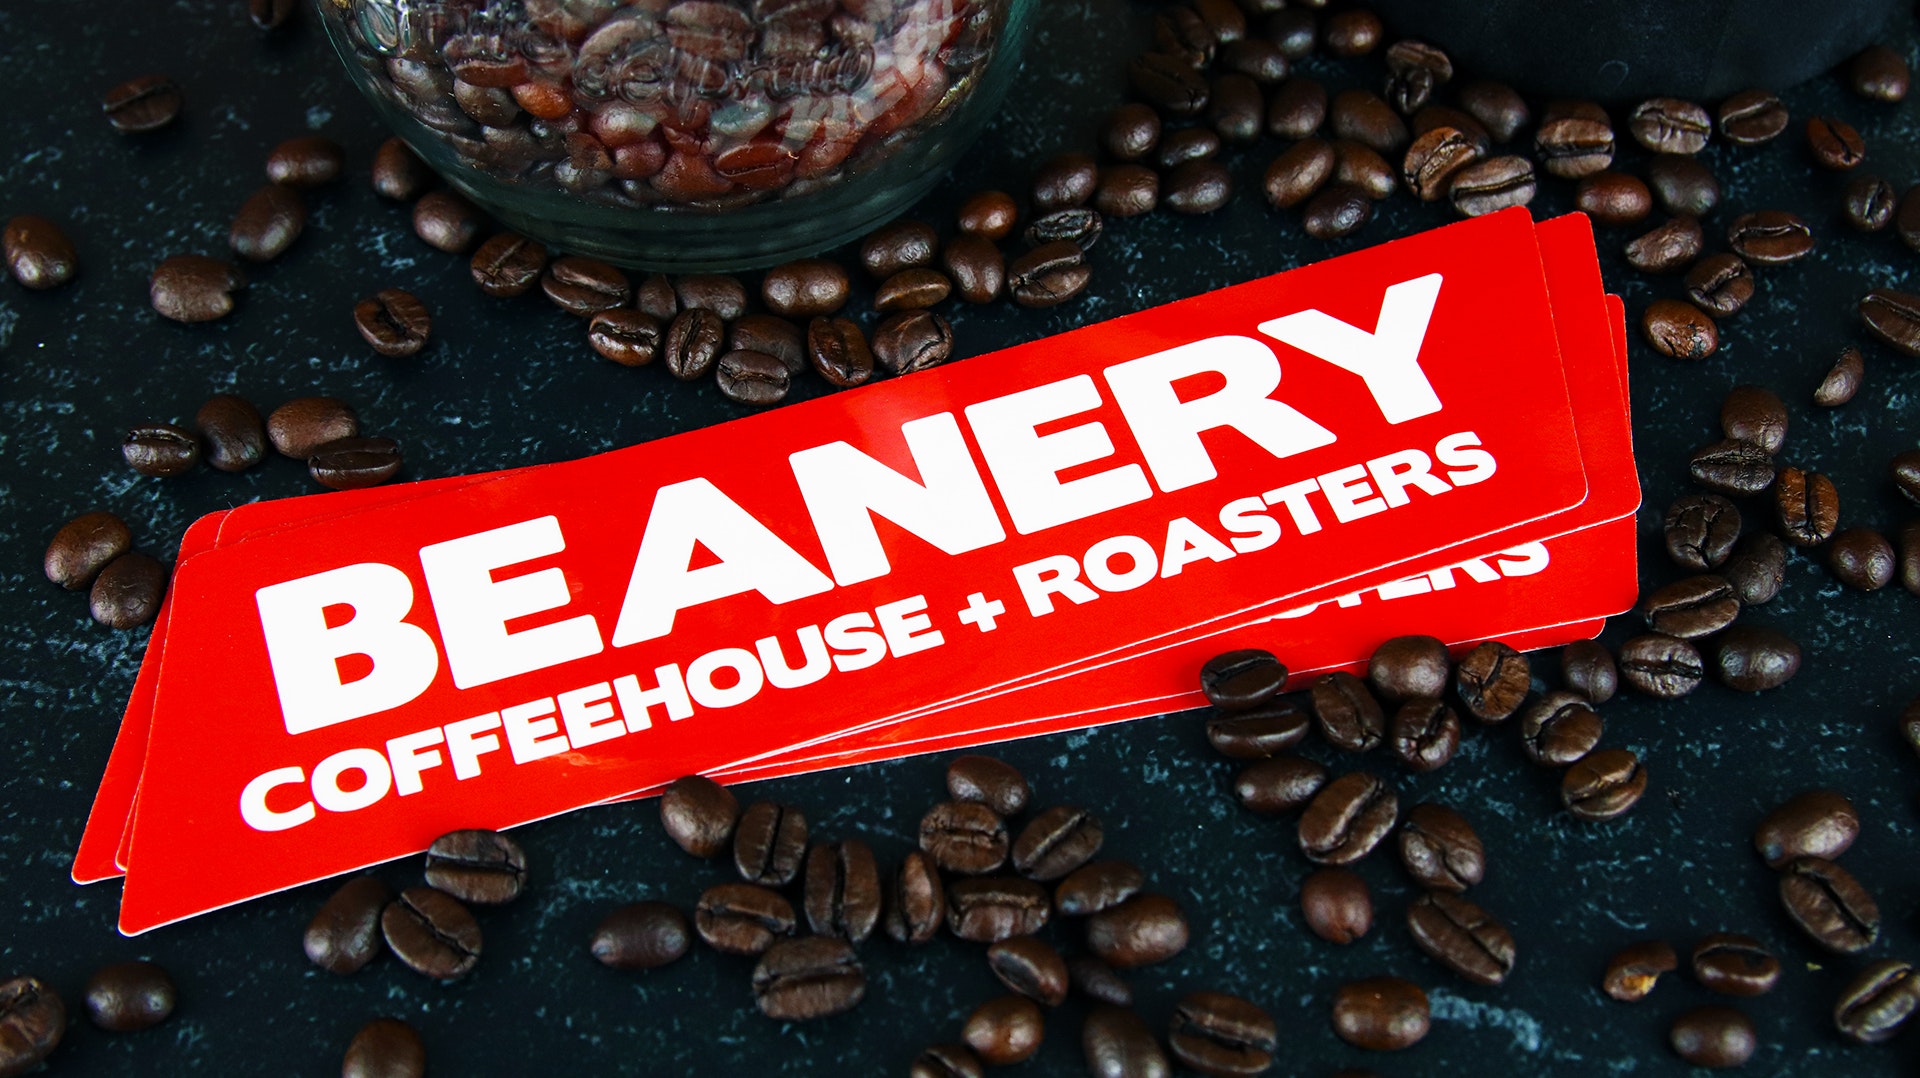 Die cut eco-friendly logo sticker amidst coffee beans